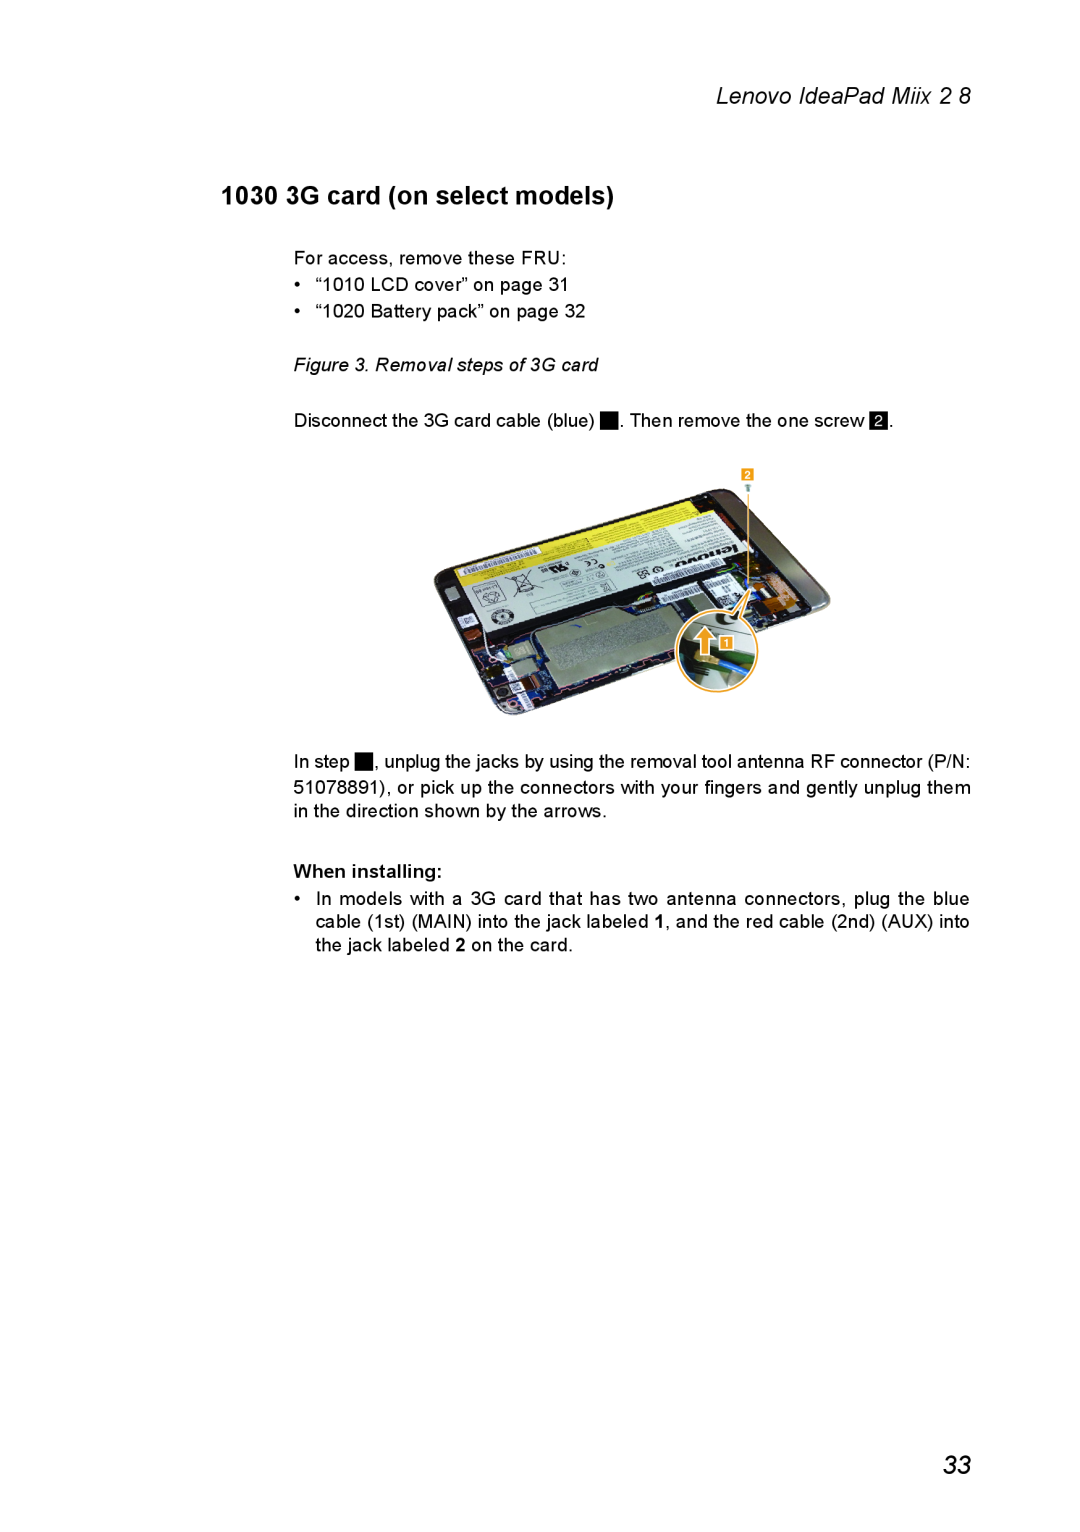 Lenovo MIIX 2 8 manual 1030 3G card on select models, Removal steps of 3G card, When installing, Lenovo IdeaPad Miix 